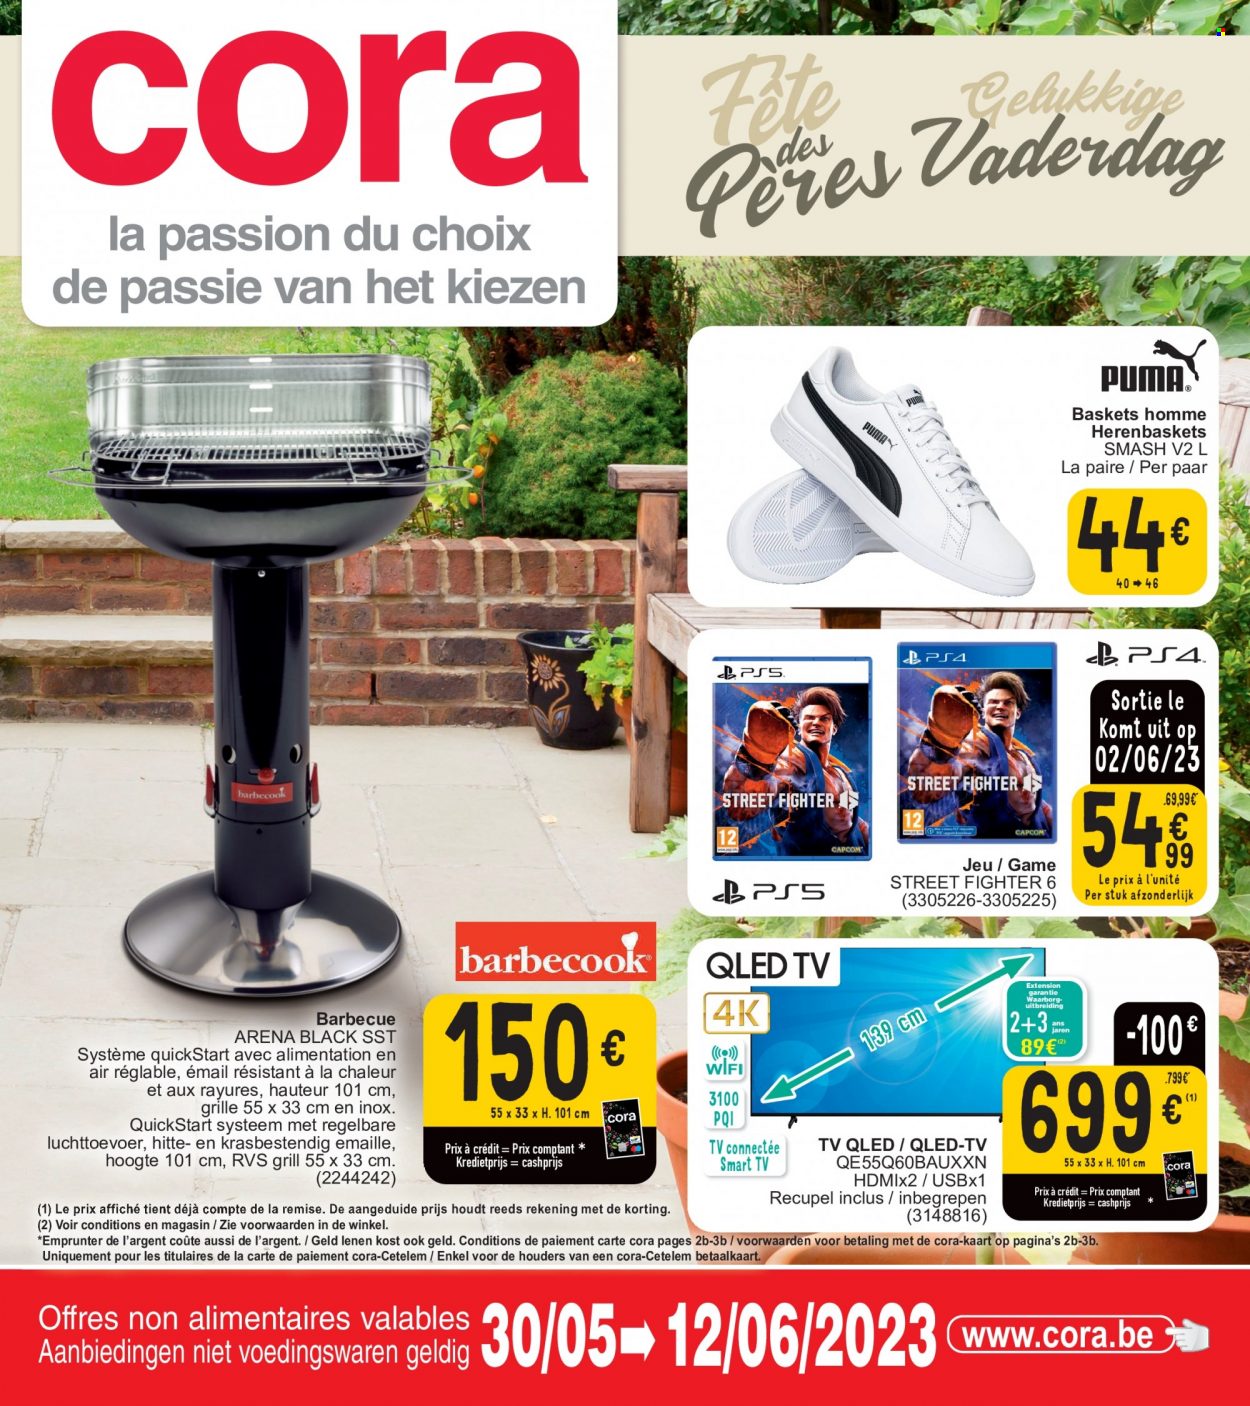 thumbnail - Cora-aanbieding - 30/05/2023 - 12/06/2023 -  producten in de aanbieding - BBQ, TV, Smart TV, grill. Pagina 1.